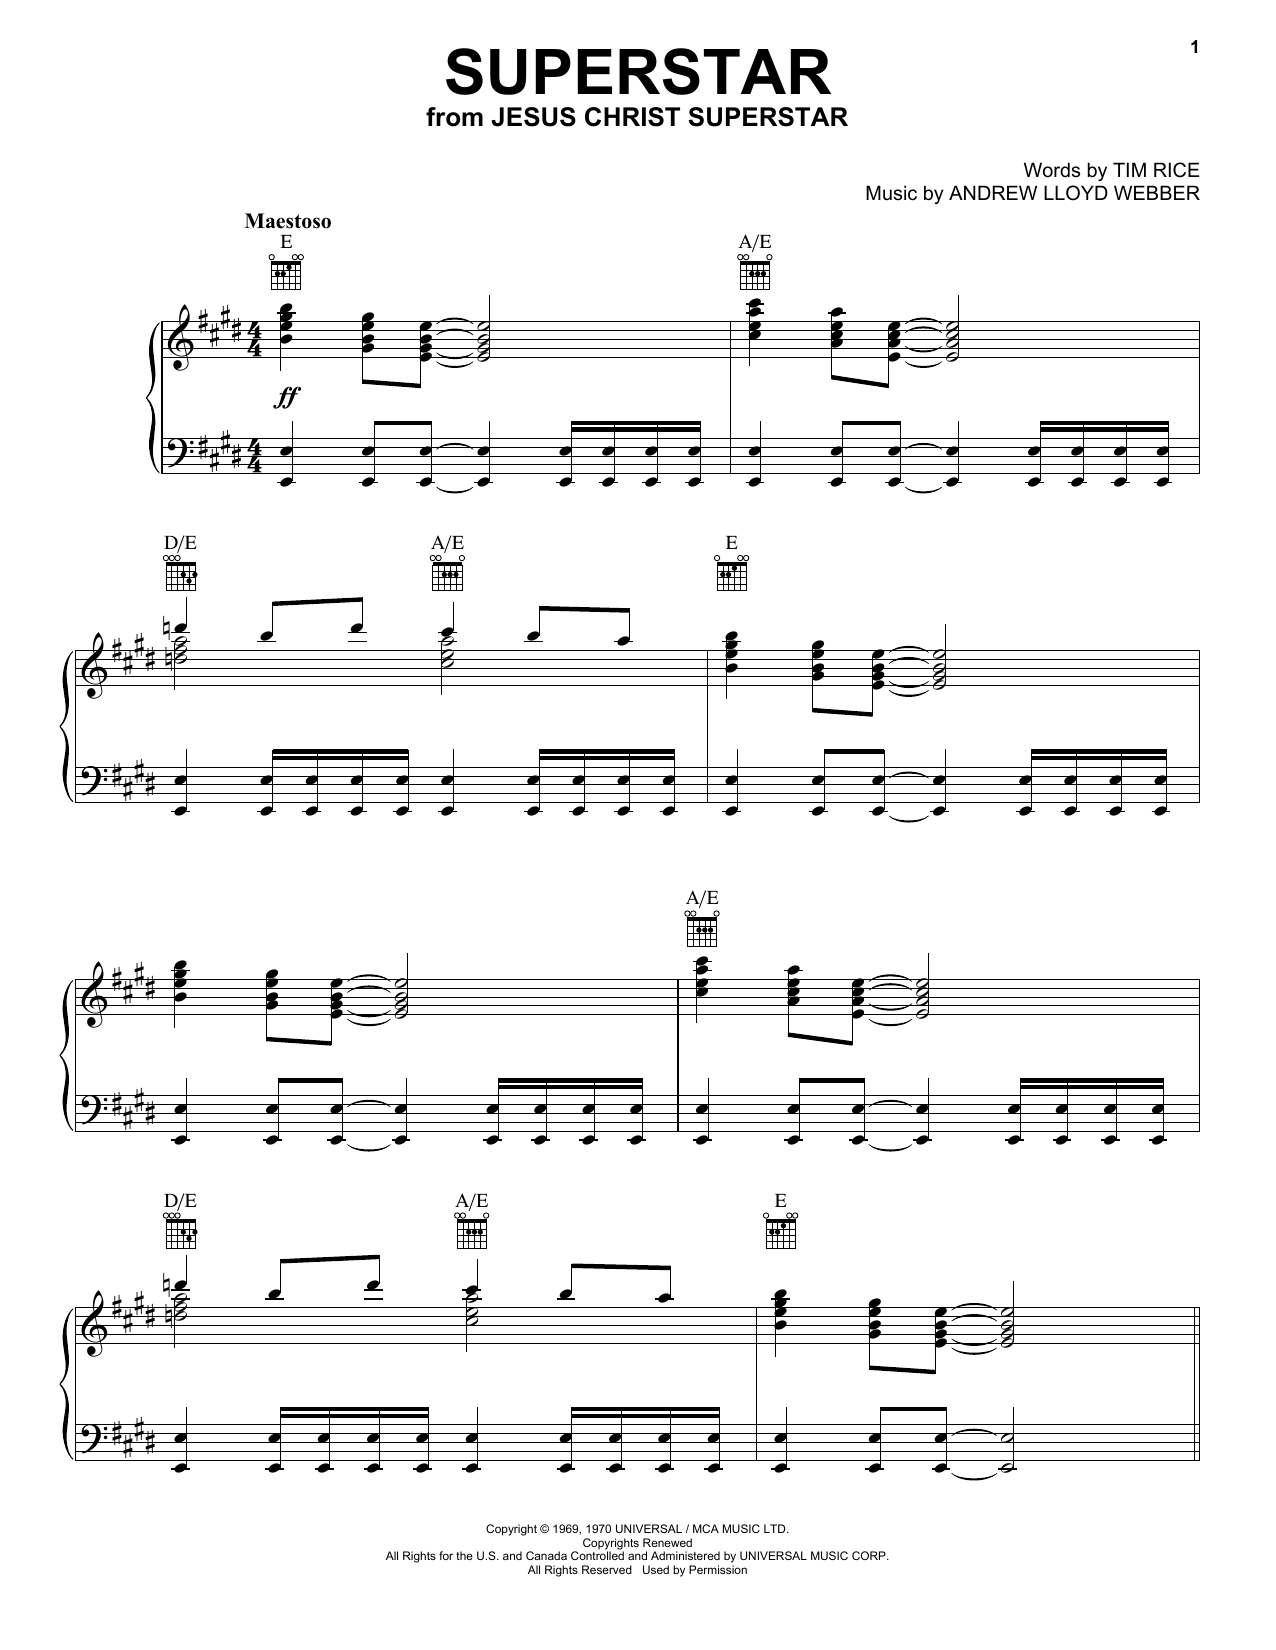 Andrew Lloyd Webber Superstar (from Jesus Christ Superstar) Sheet Music Notes & Chords for Tenor Saxophone - Download or Print PDF